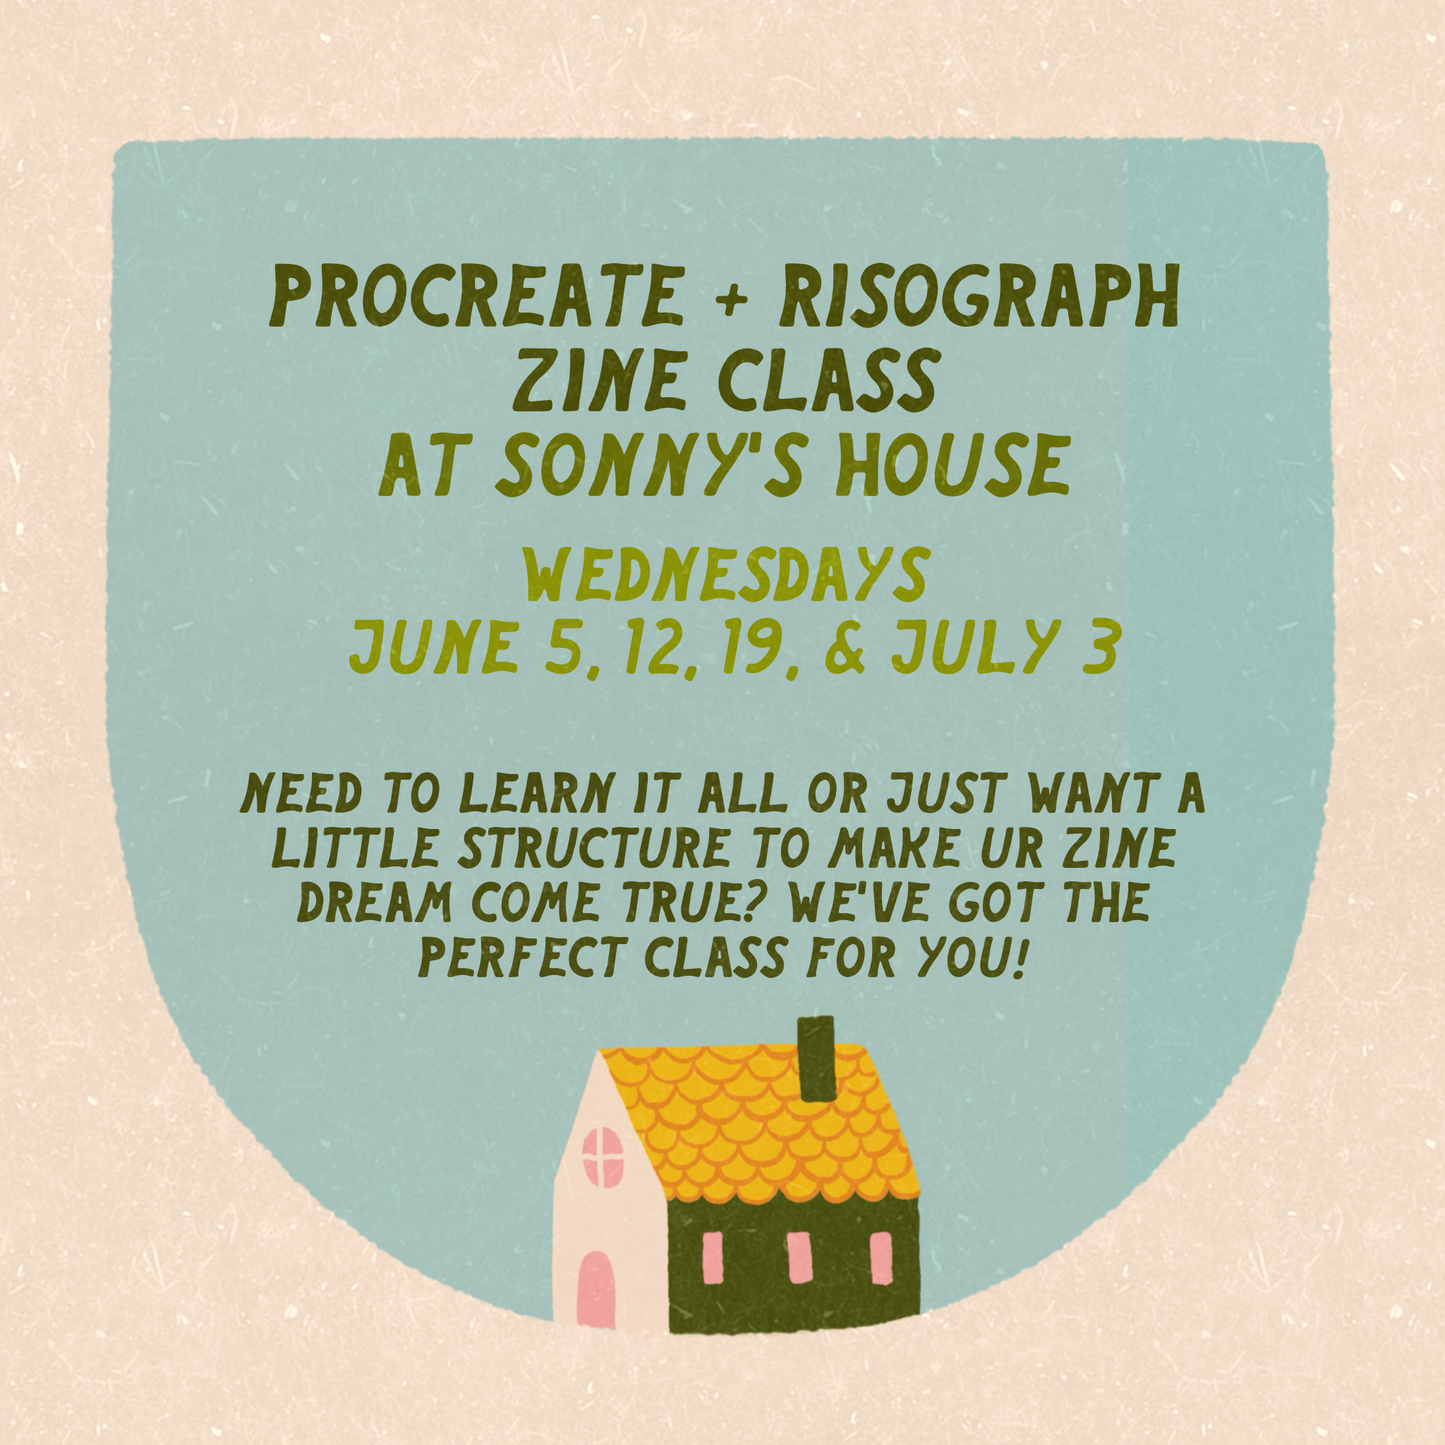 Procreate + Risograph Zine Class by Sonny Honey Press Starting June 5th